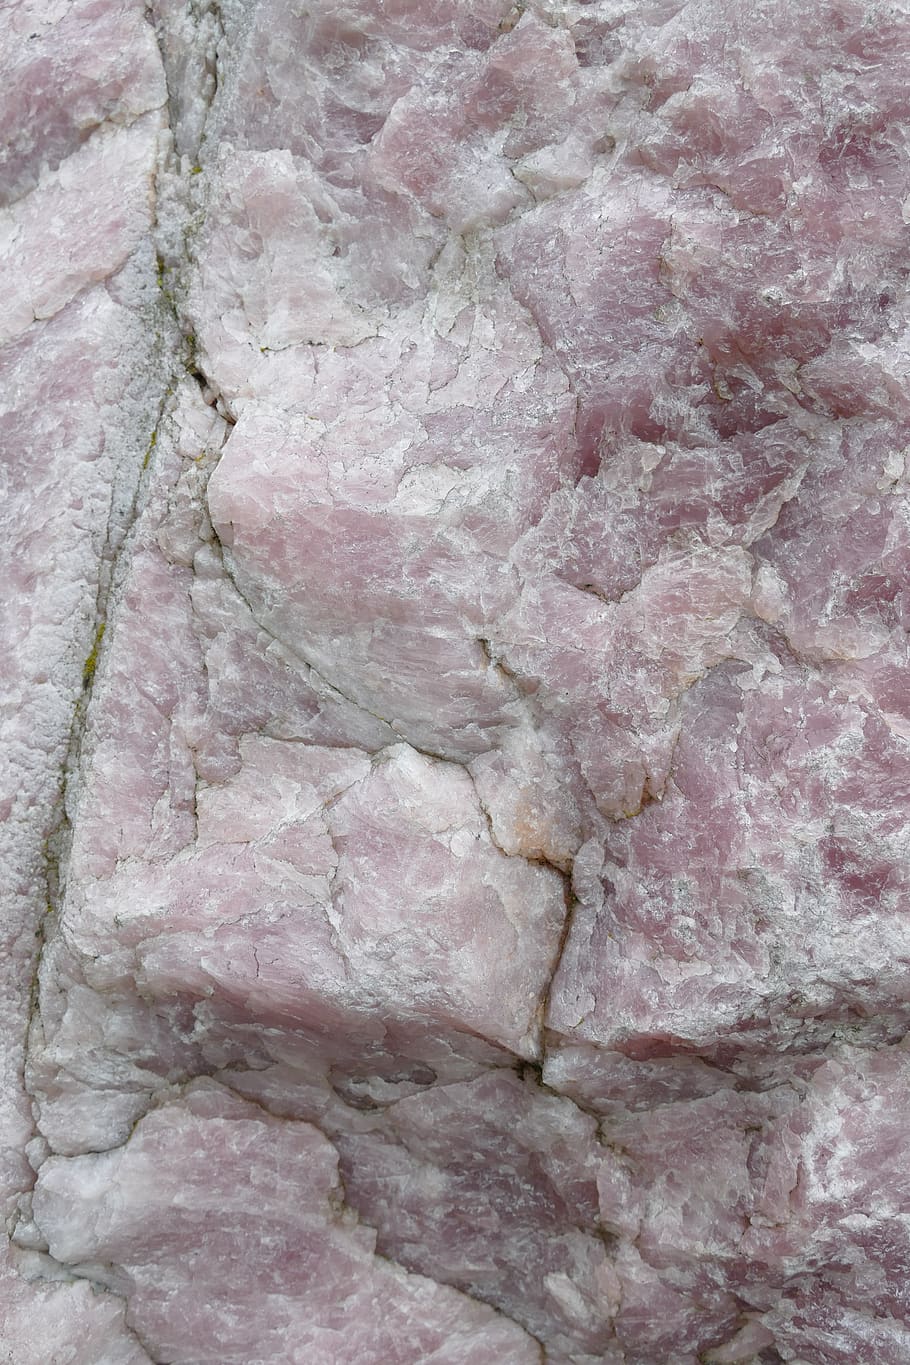 quartz, rose quartz, gemstone, rock, jewelry, pink, stone, marbled effect, granite, solid